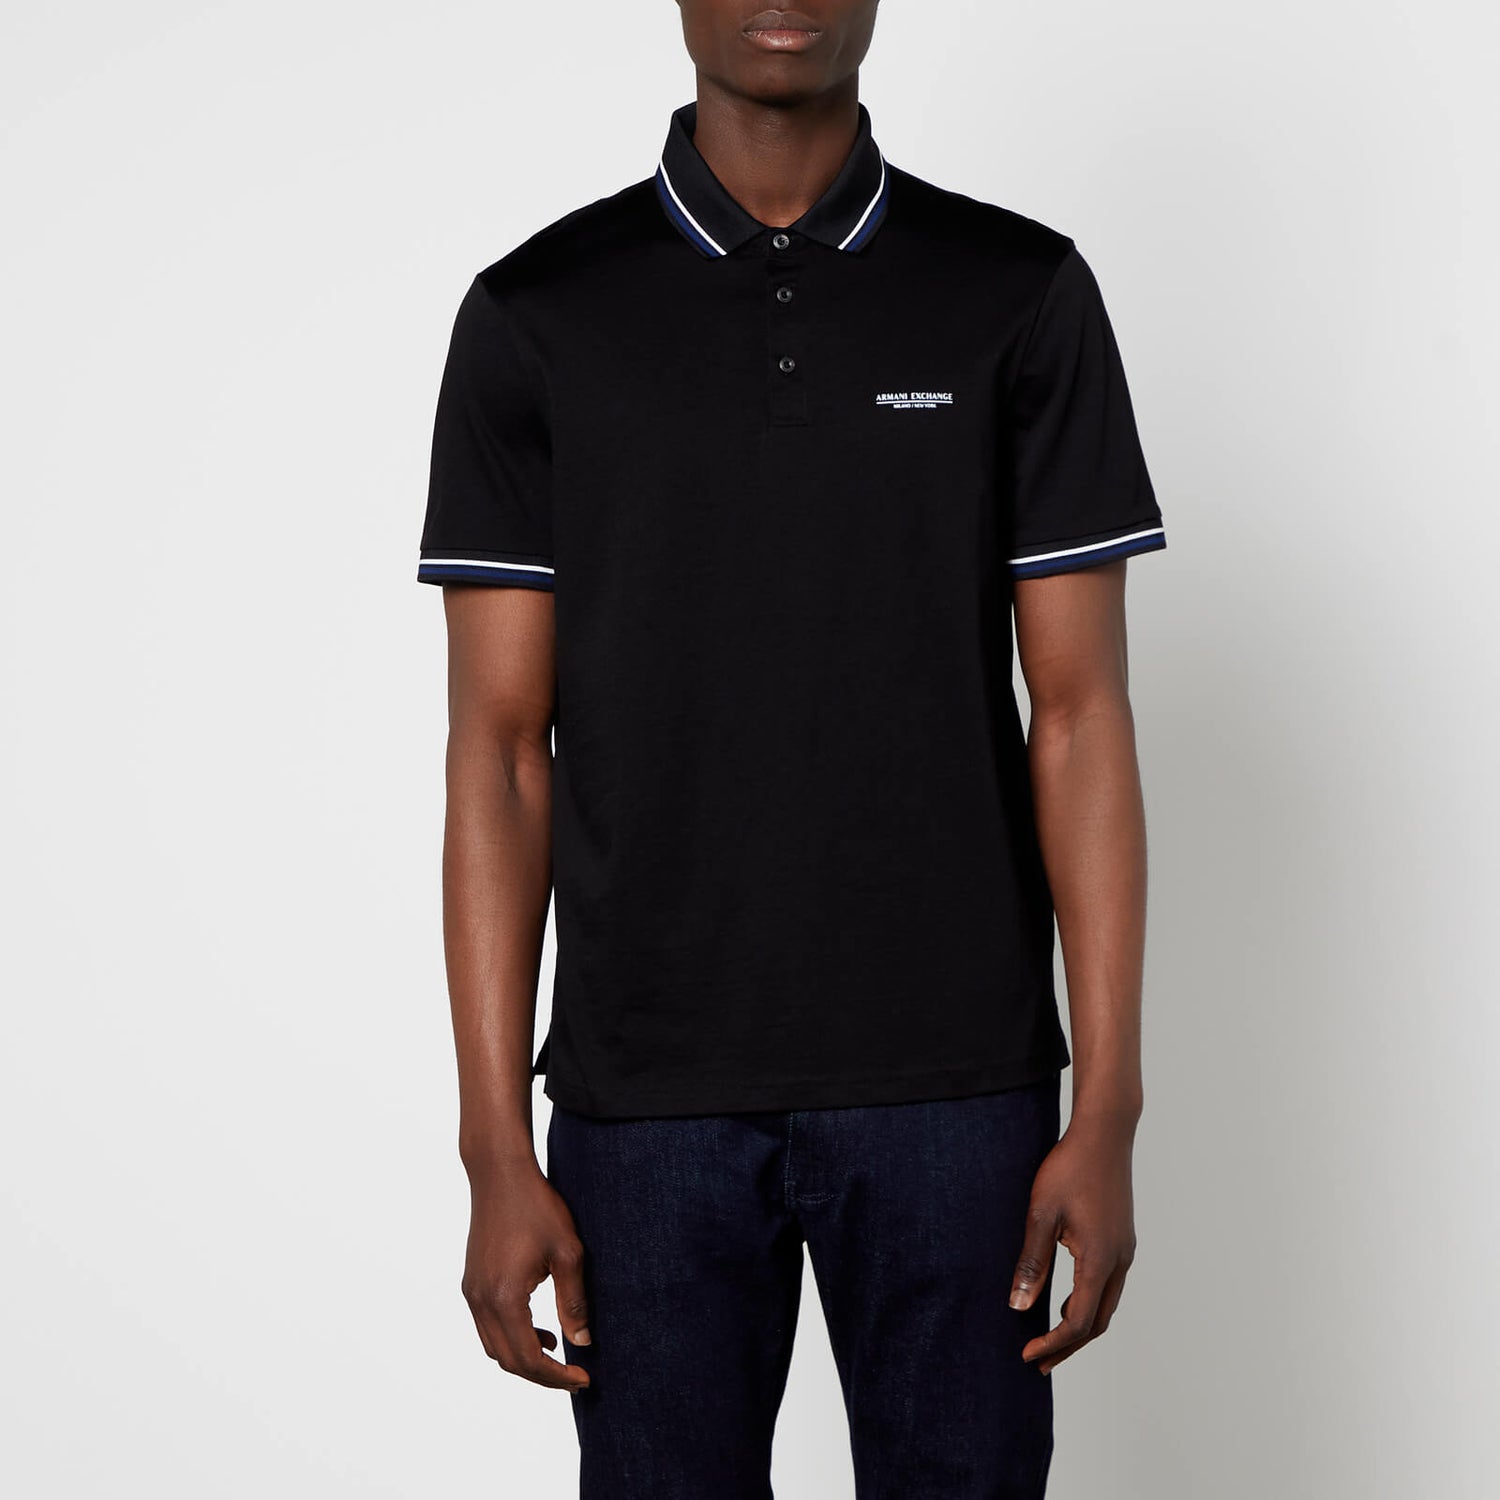 Armani Exchange Men's Mercurized Cotton Polo Shirt - Black - S